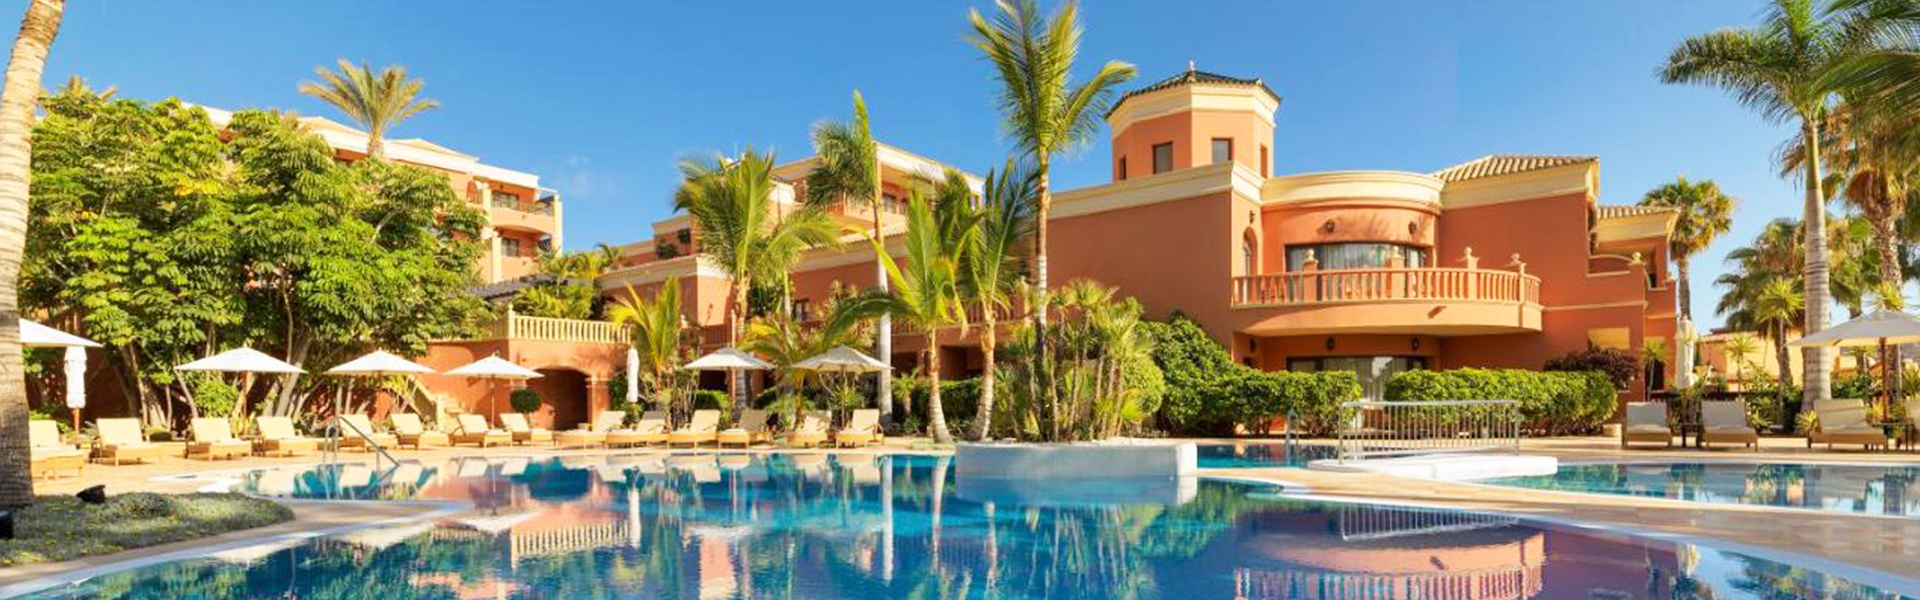 Bilyana Golf-Hotel Las Madrigueras Golf Resort & Spa